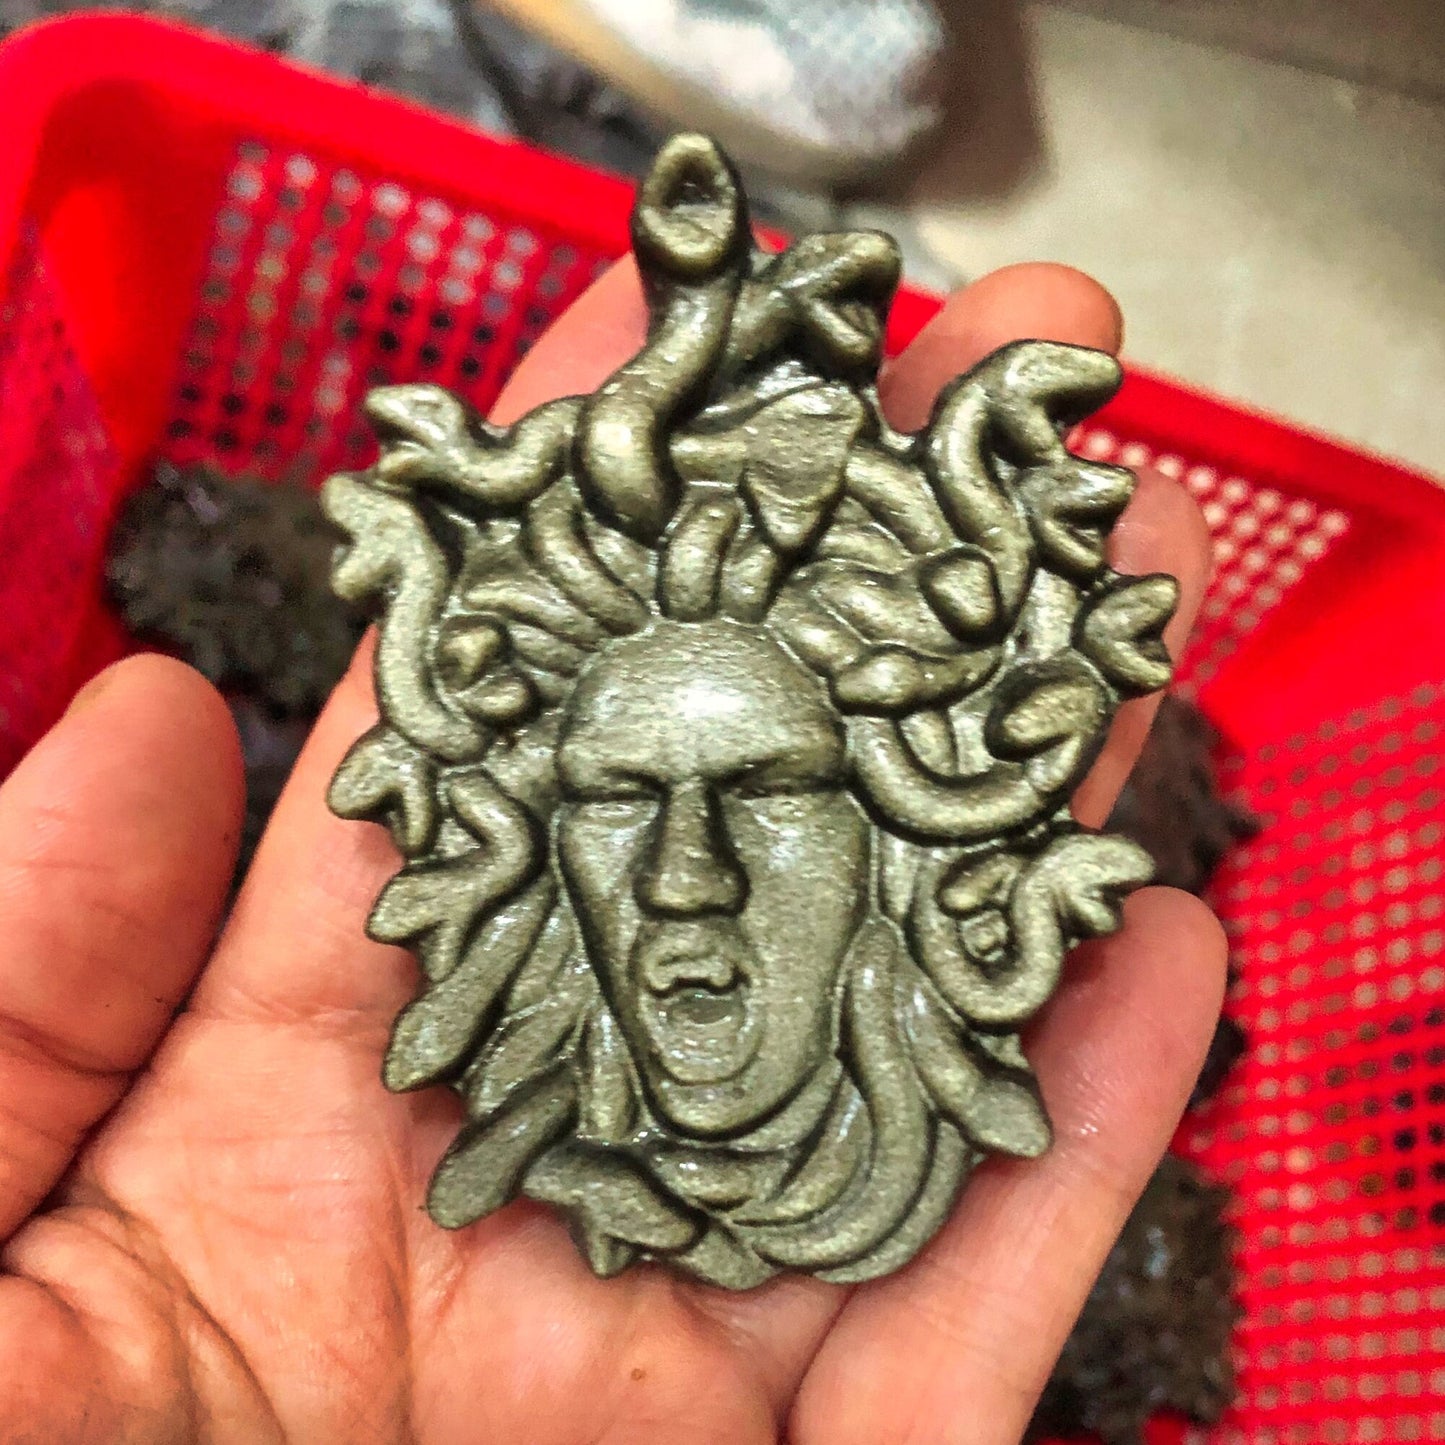 Hand Carved Silver Obsidian Medusa Head Sculpture - 8CM Natural Crystal Healing Craft for Wicca Decoration